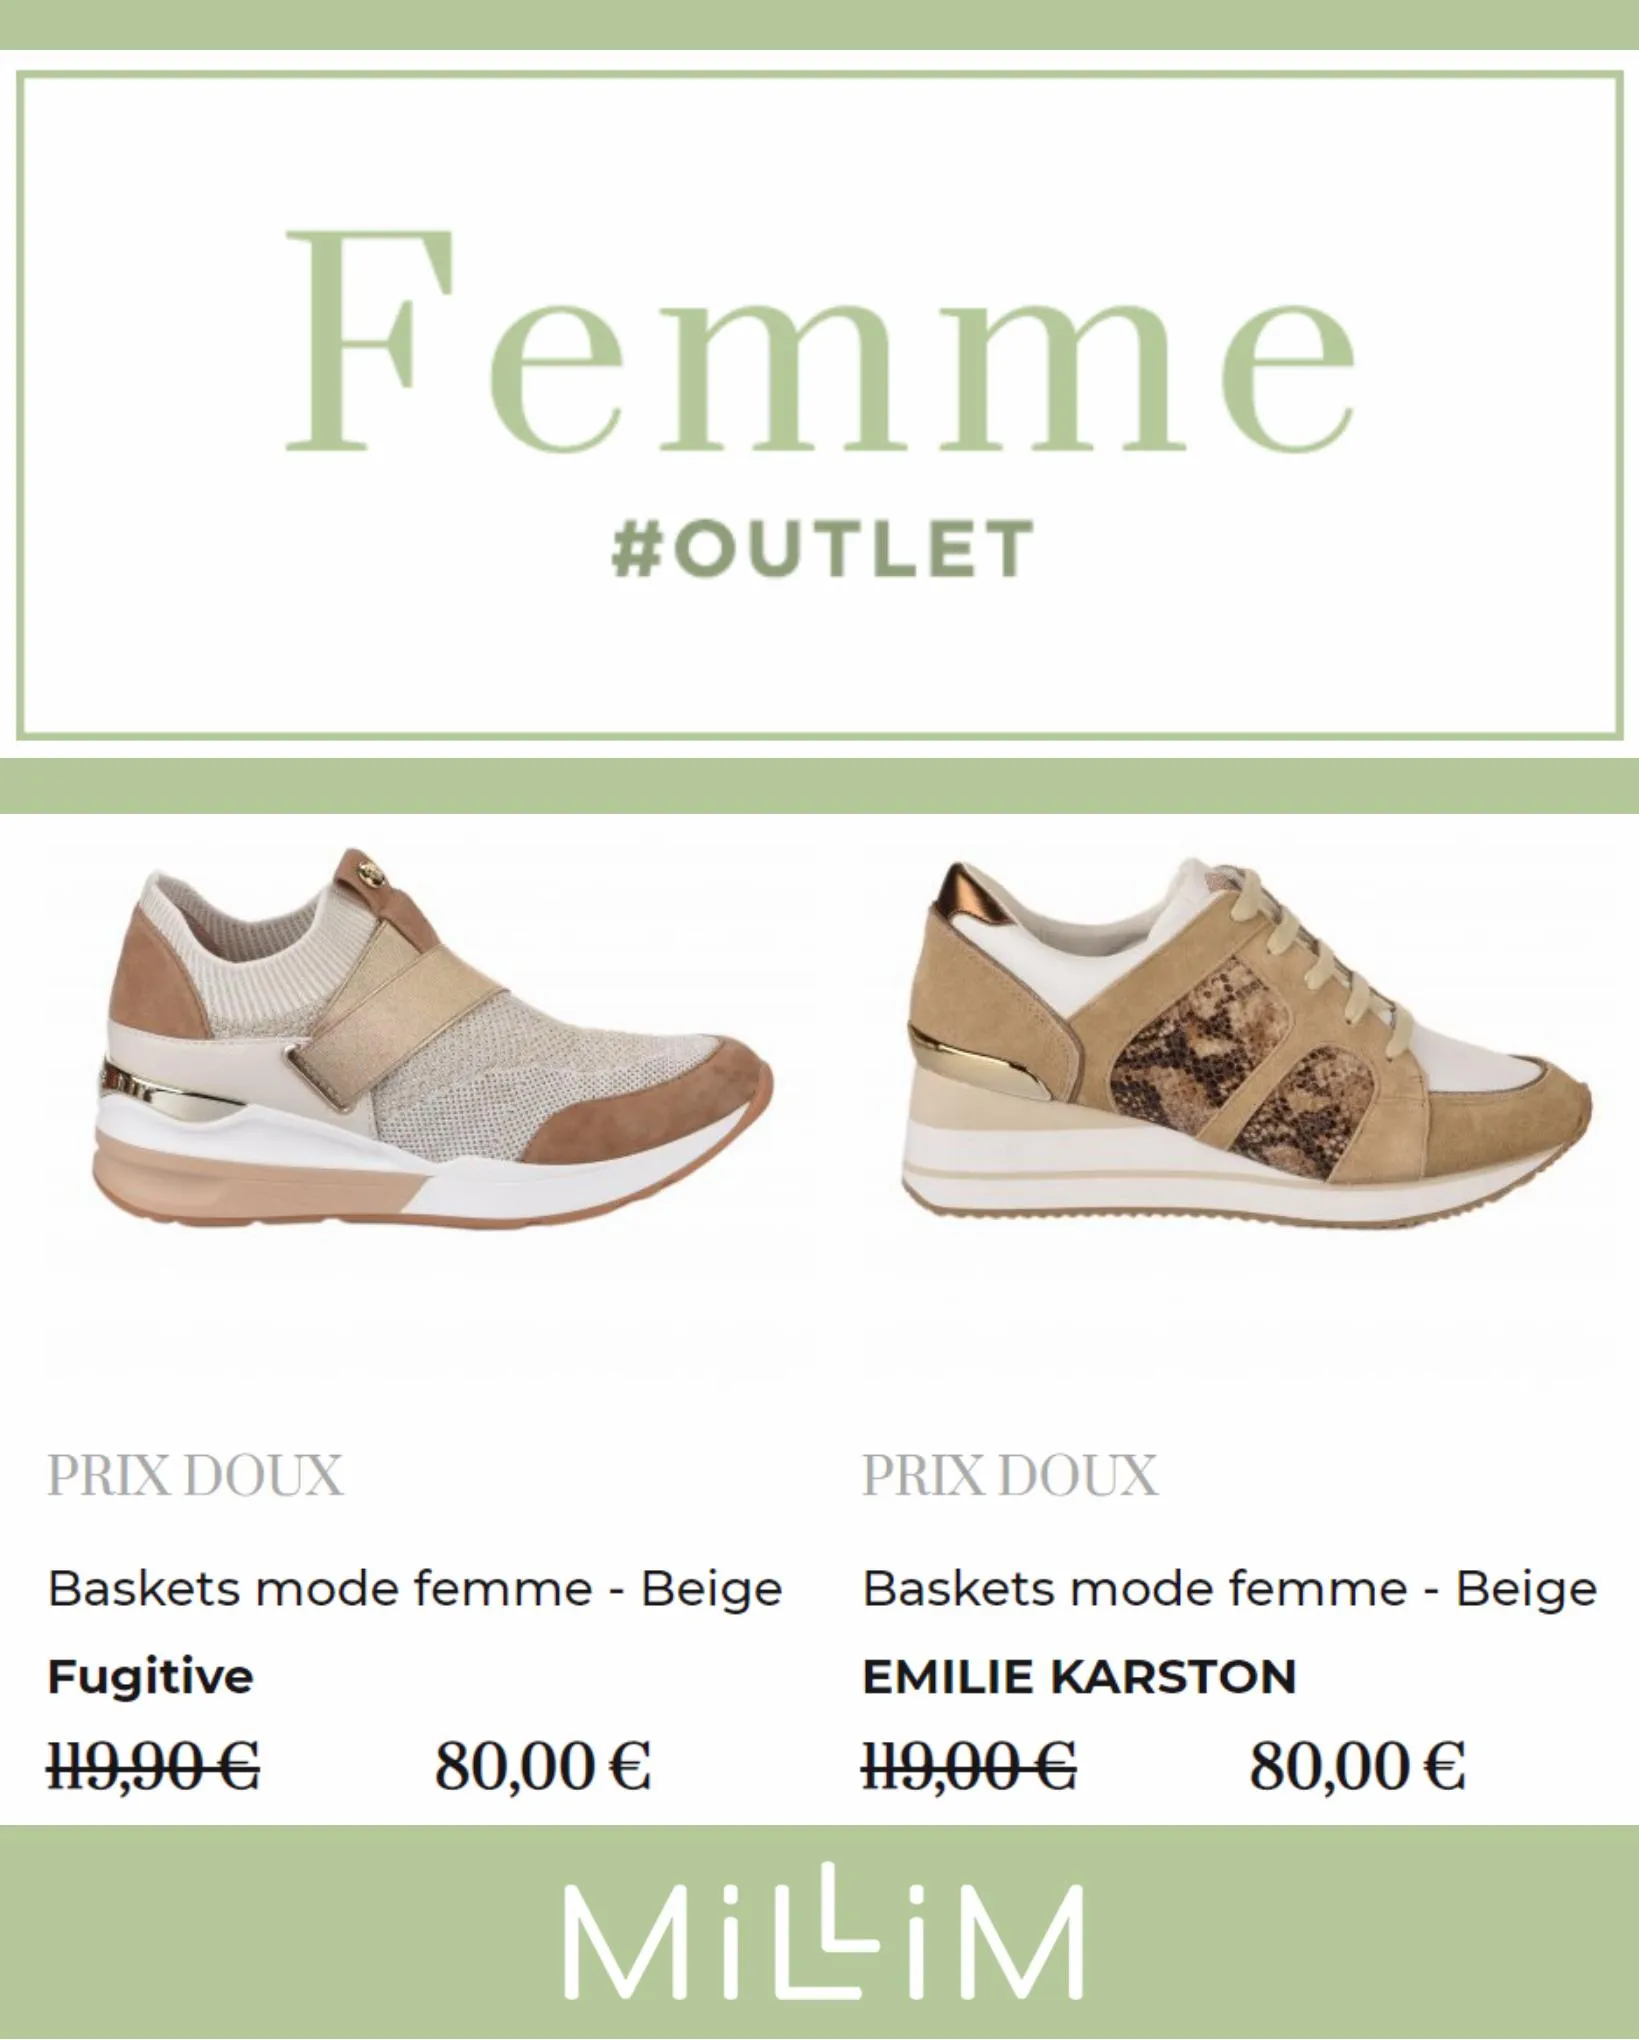 Catalogue Femme #Outlet, page 00003